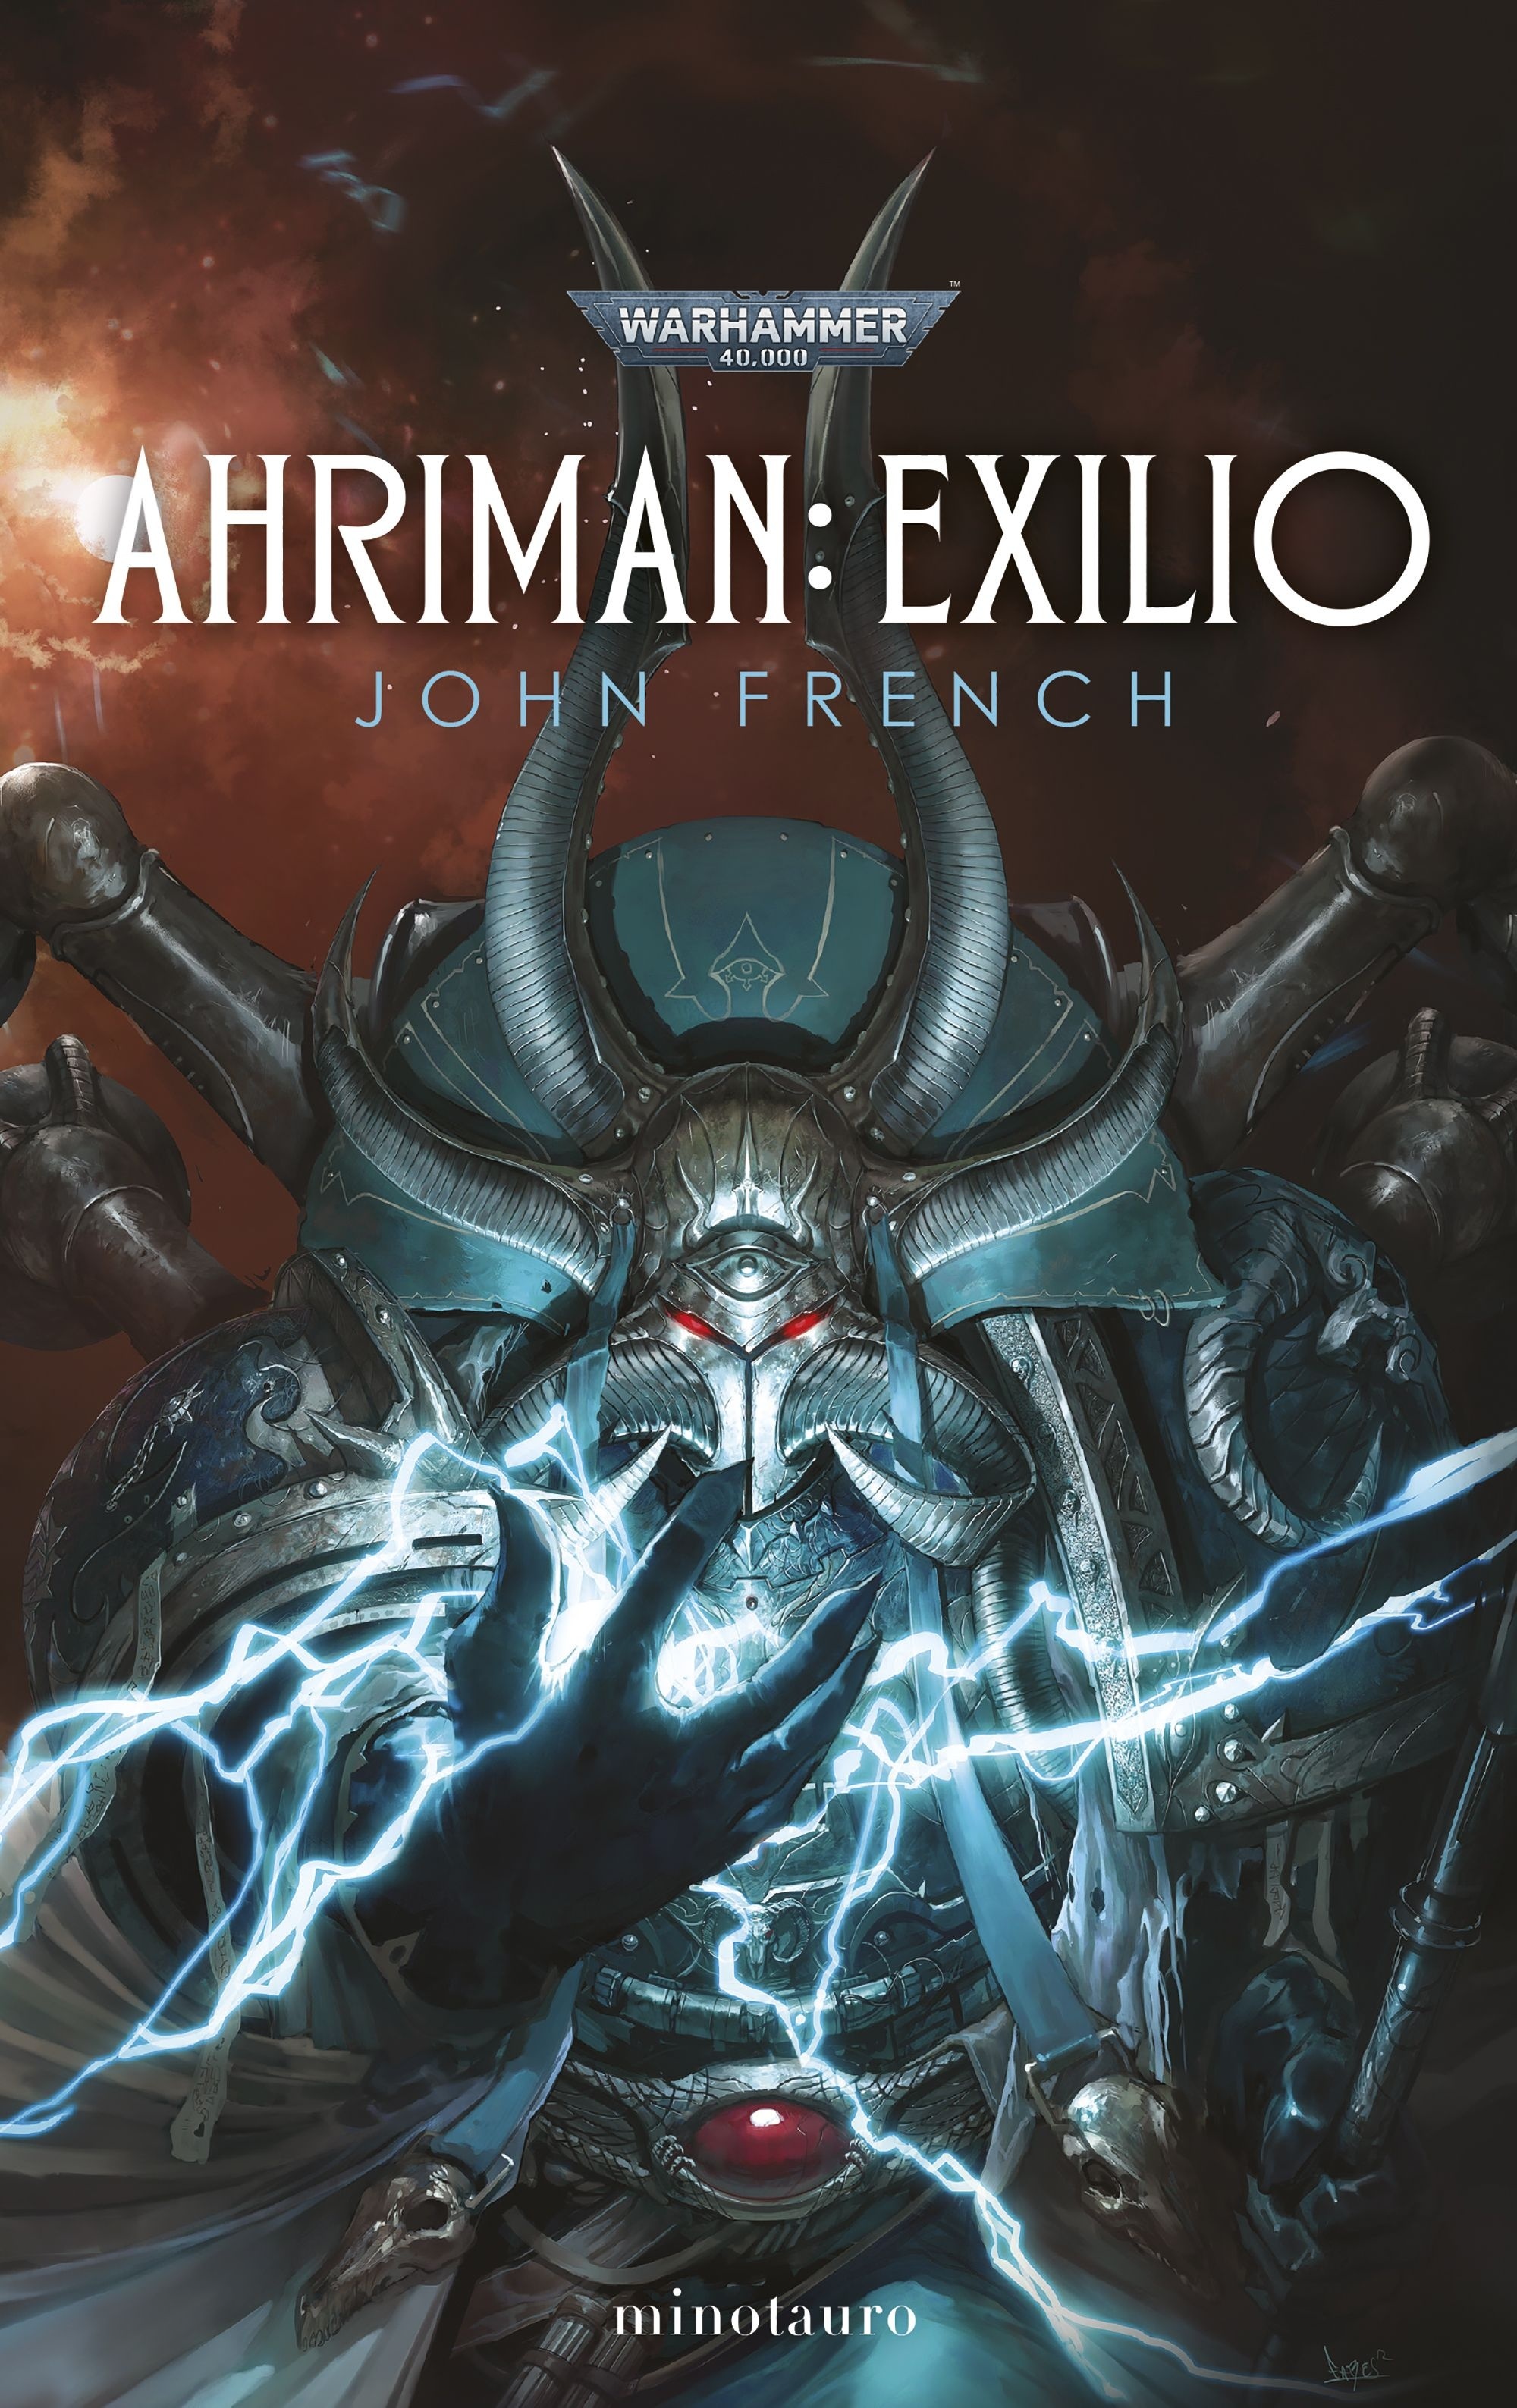 Ahriman: Exilio